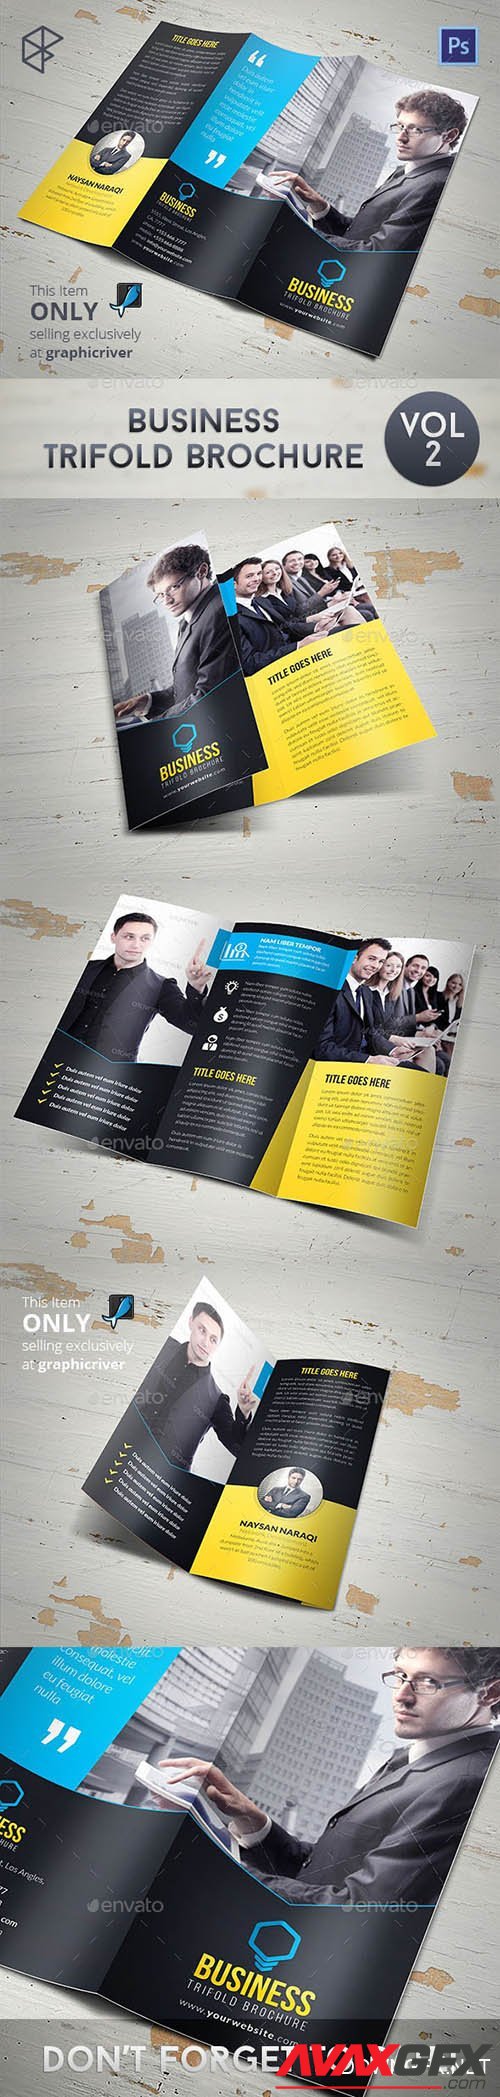 Graphicriver - Business Trifold Brochure Vol 2 7917365